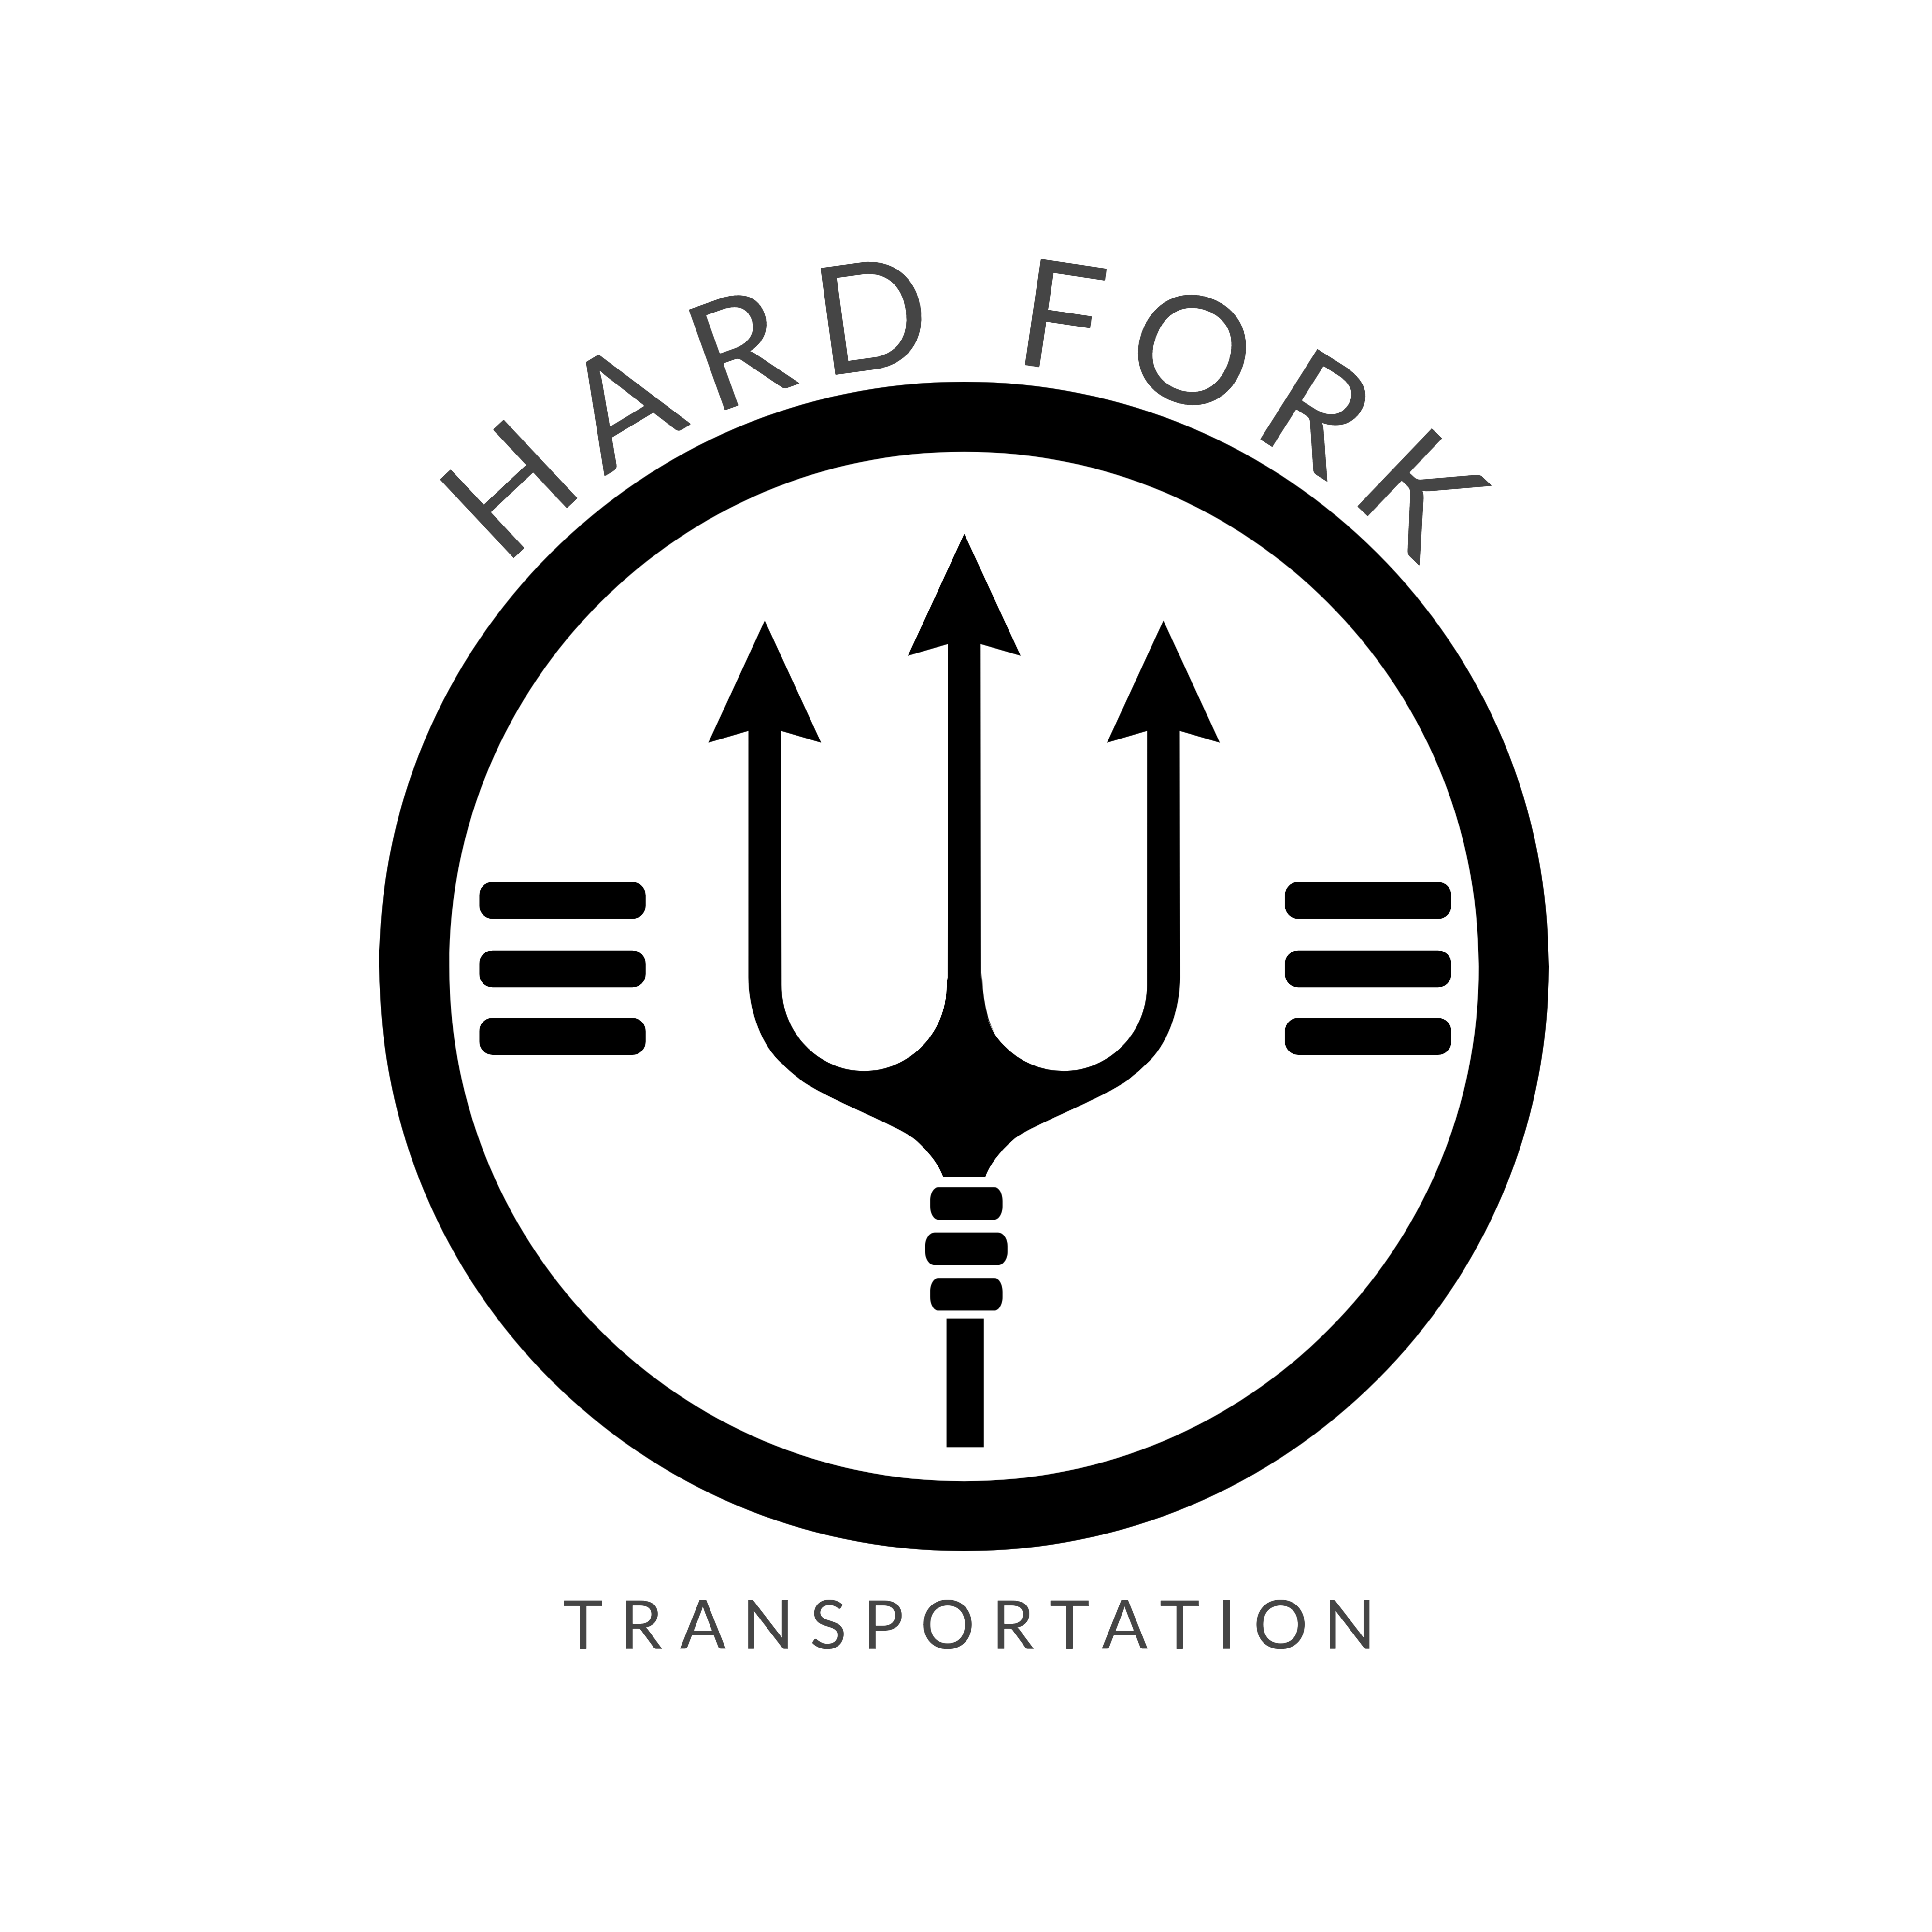 Hard Fork Transportation